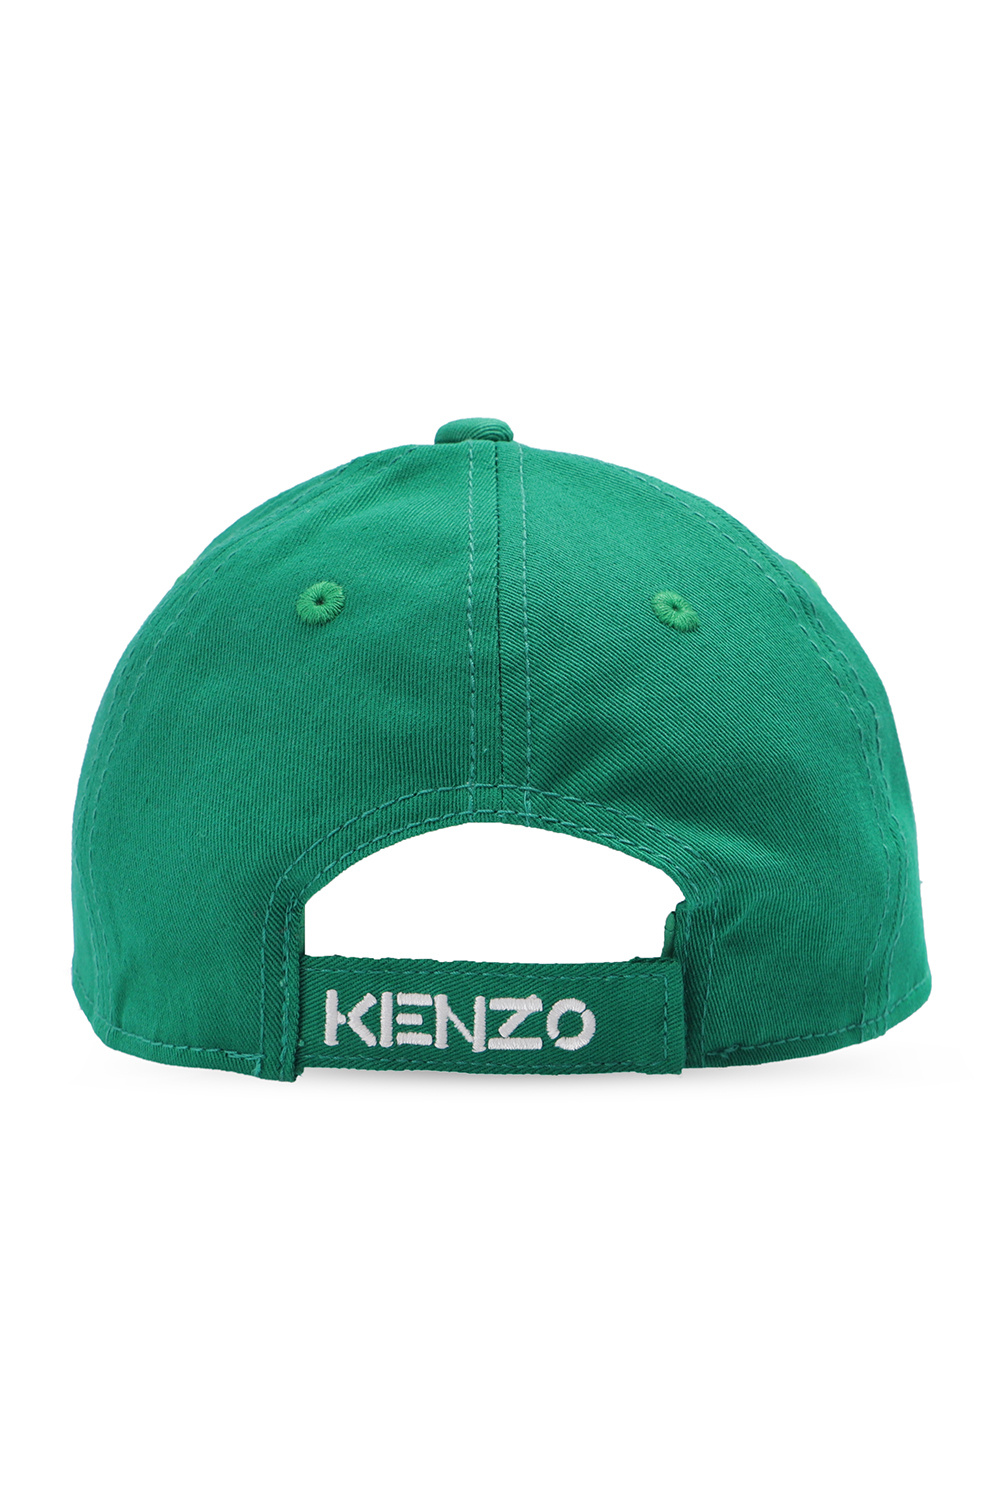 Baseball Mens Kids Lorenzo Kenzo Ellesse IetpShops Yemen Hat - cap Bucket -